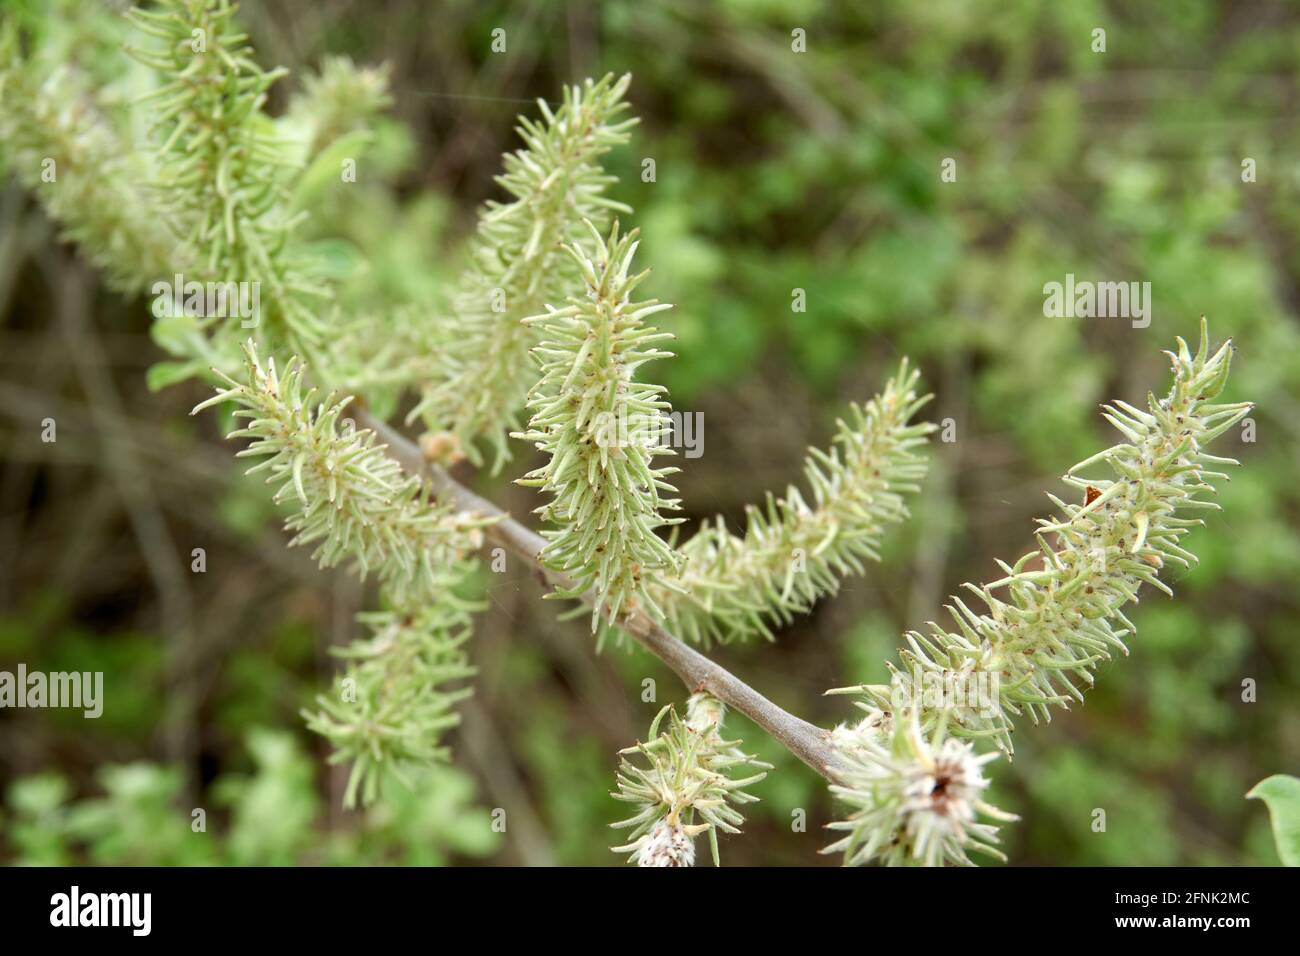 Closeup shot of the green Salix aurita plant grown in the garden Stock Photo